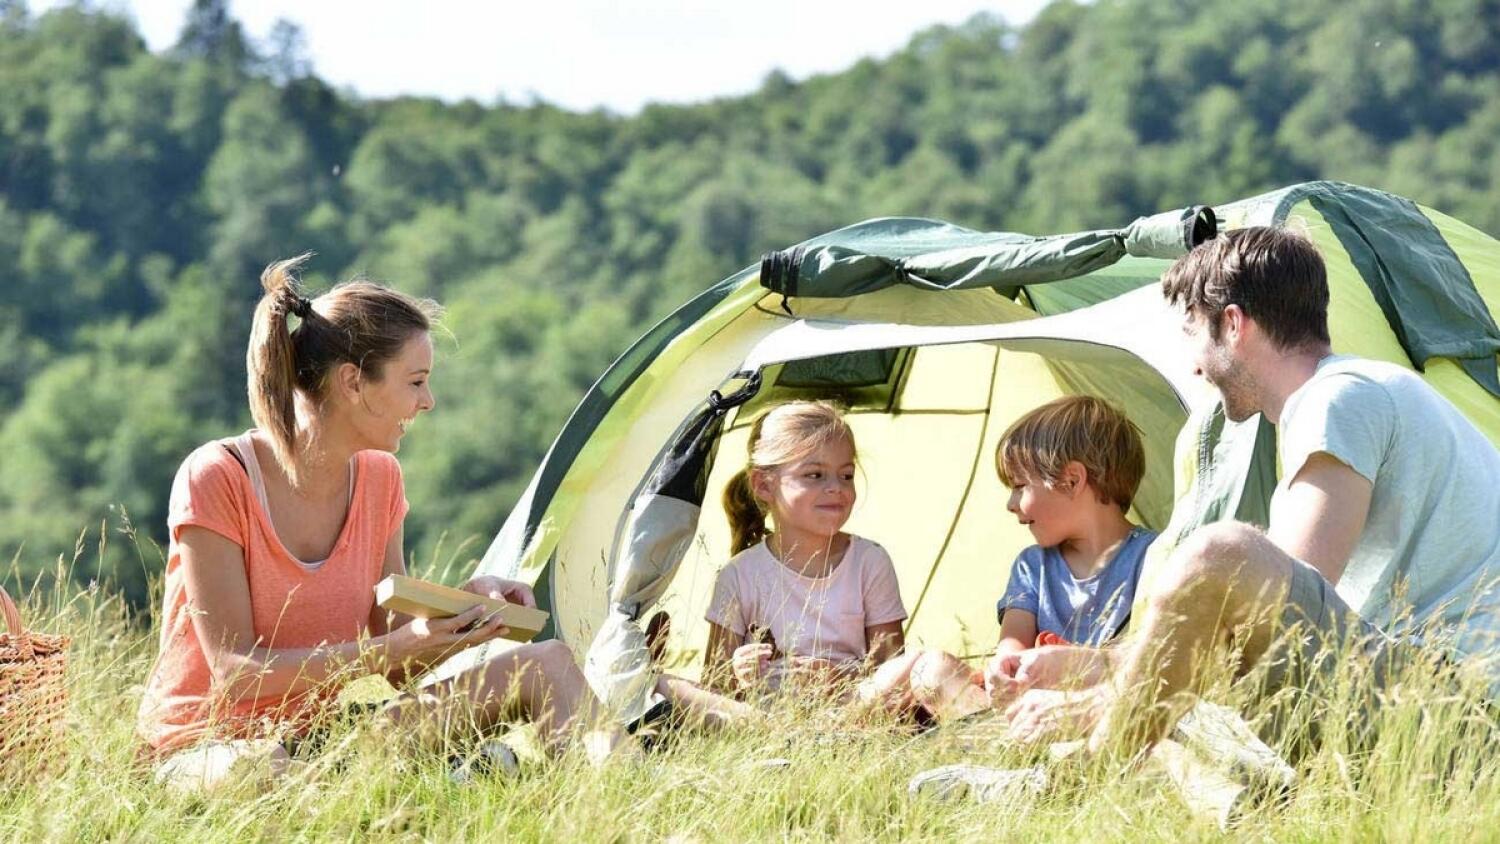 Stay in a camp. Семья в палатке. Семья на природе с палаткой. Дружная семья палатка. Семья пикник у костра.